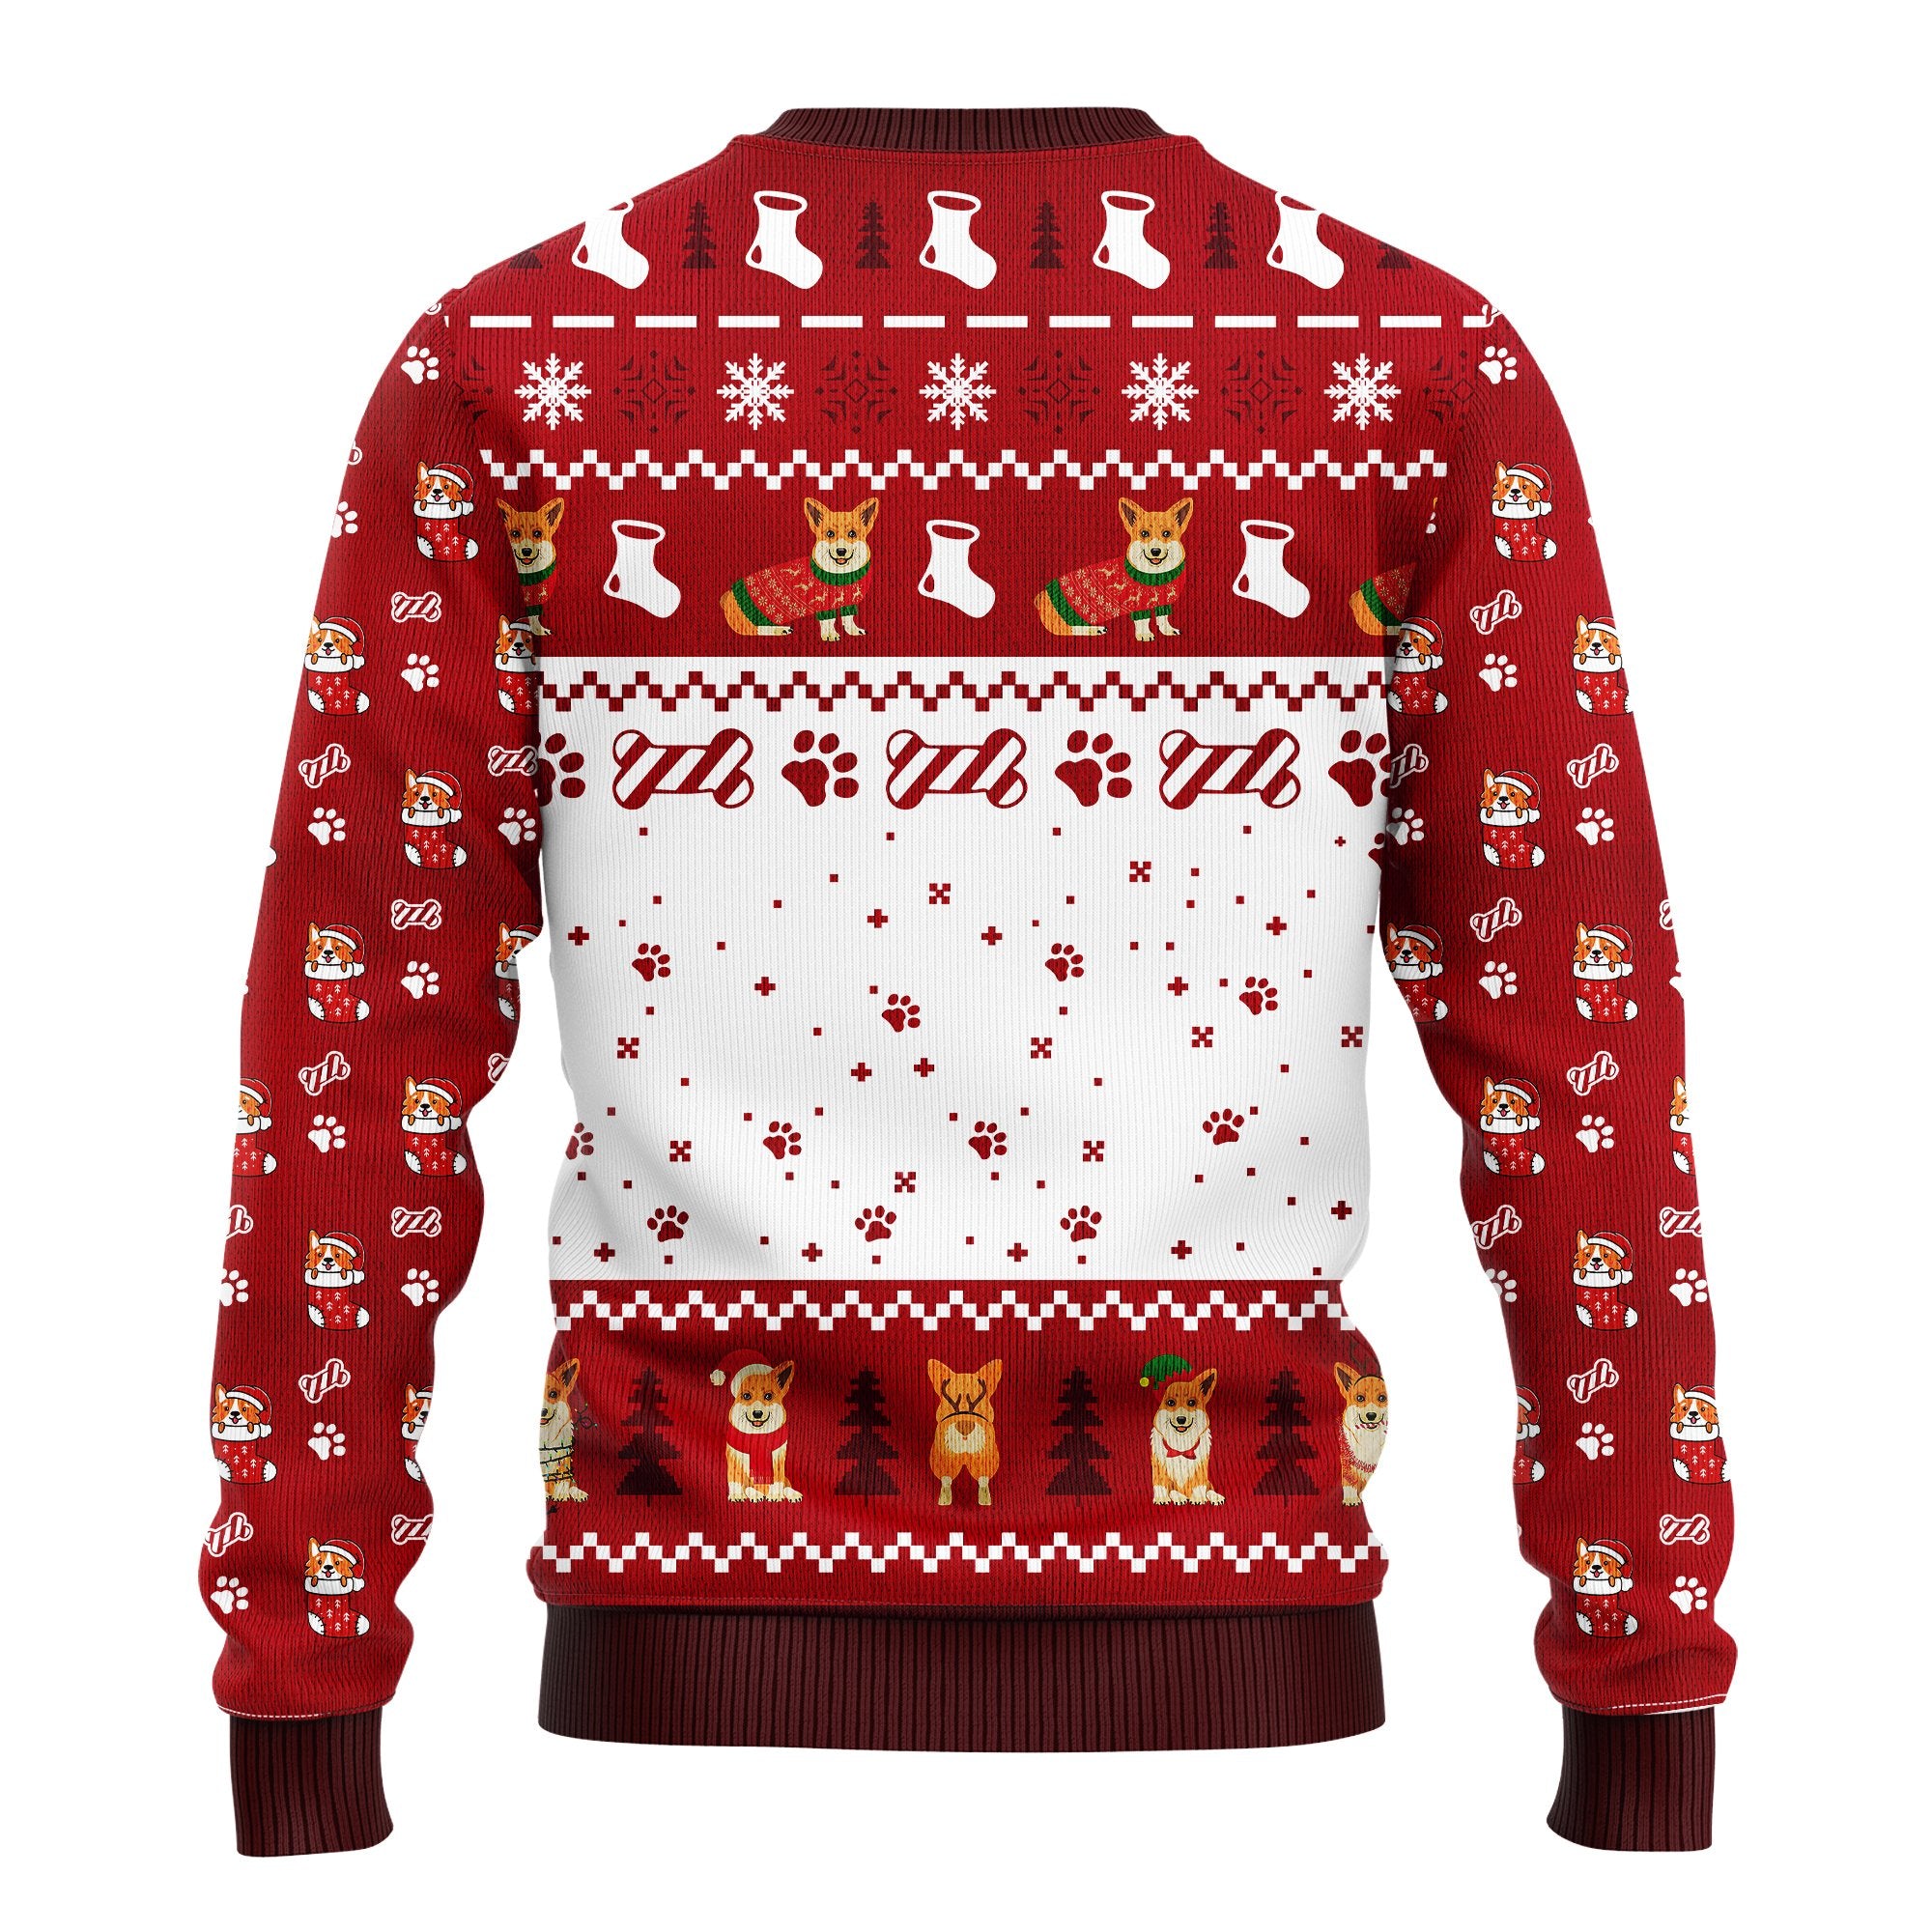 Corgi Noel Cute Ugly Christmas Sweater Amazing Gift Idea Thanksgiving Gift